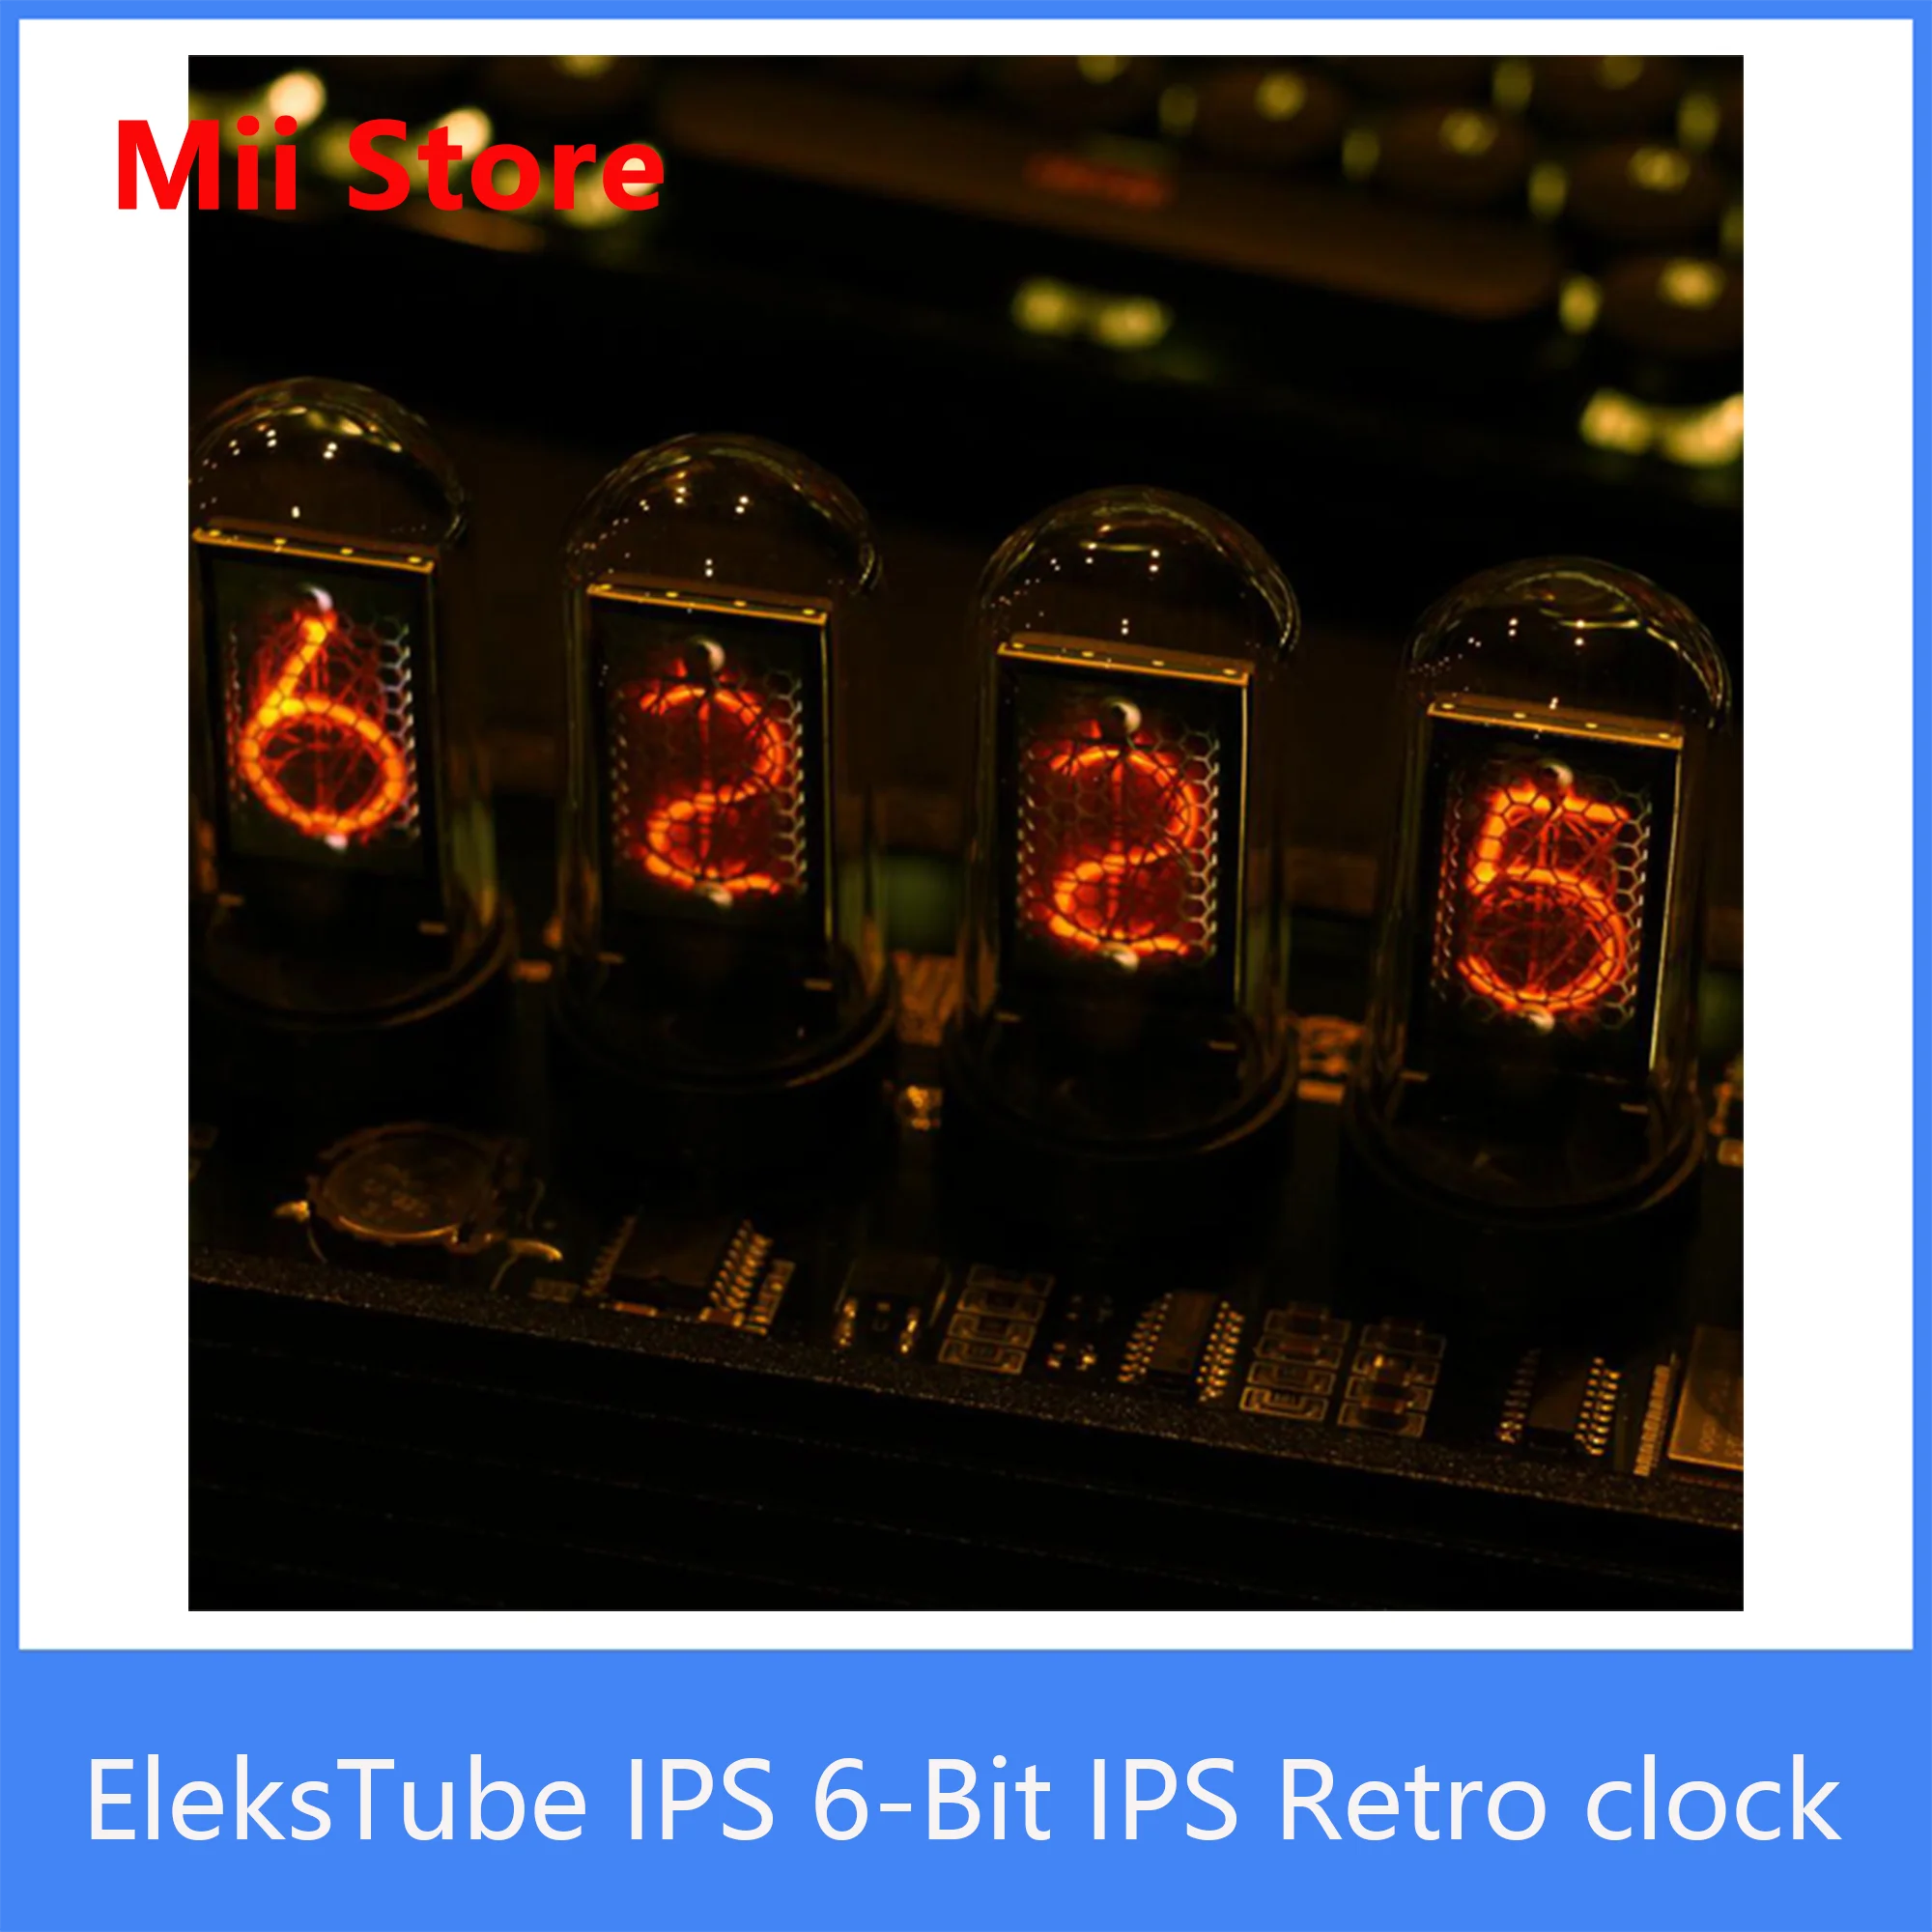 

EleksMaker EleksTube IPS 6-Bit IPS Retro Glows Analog Nixie Tube elekstube clock